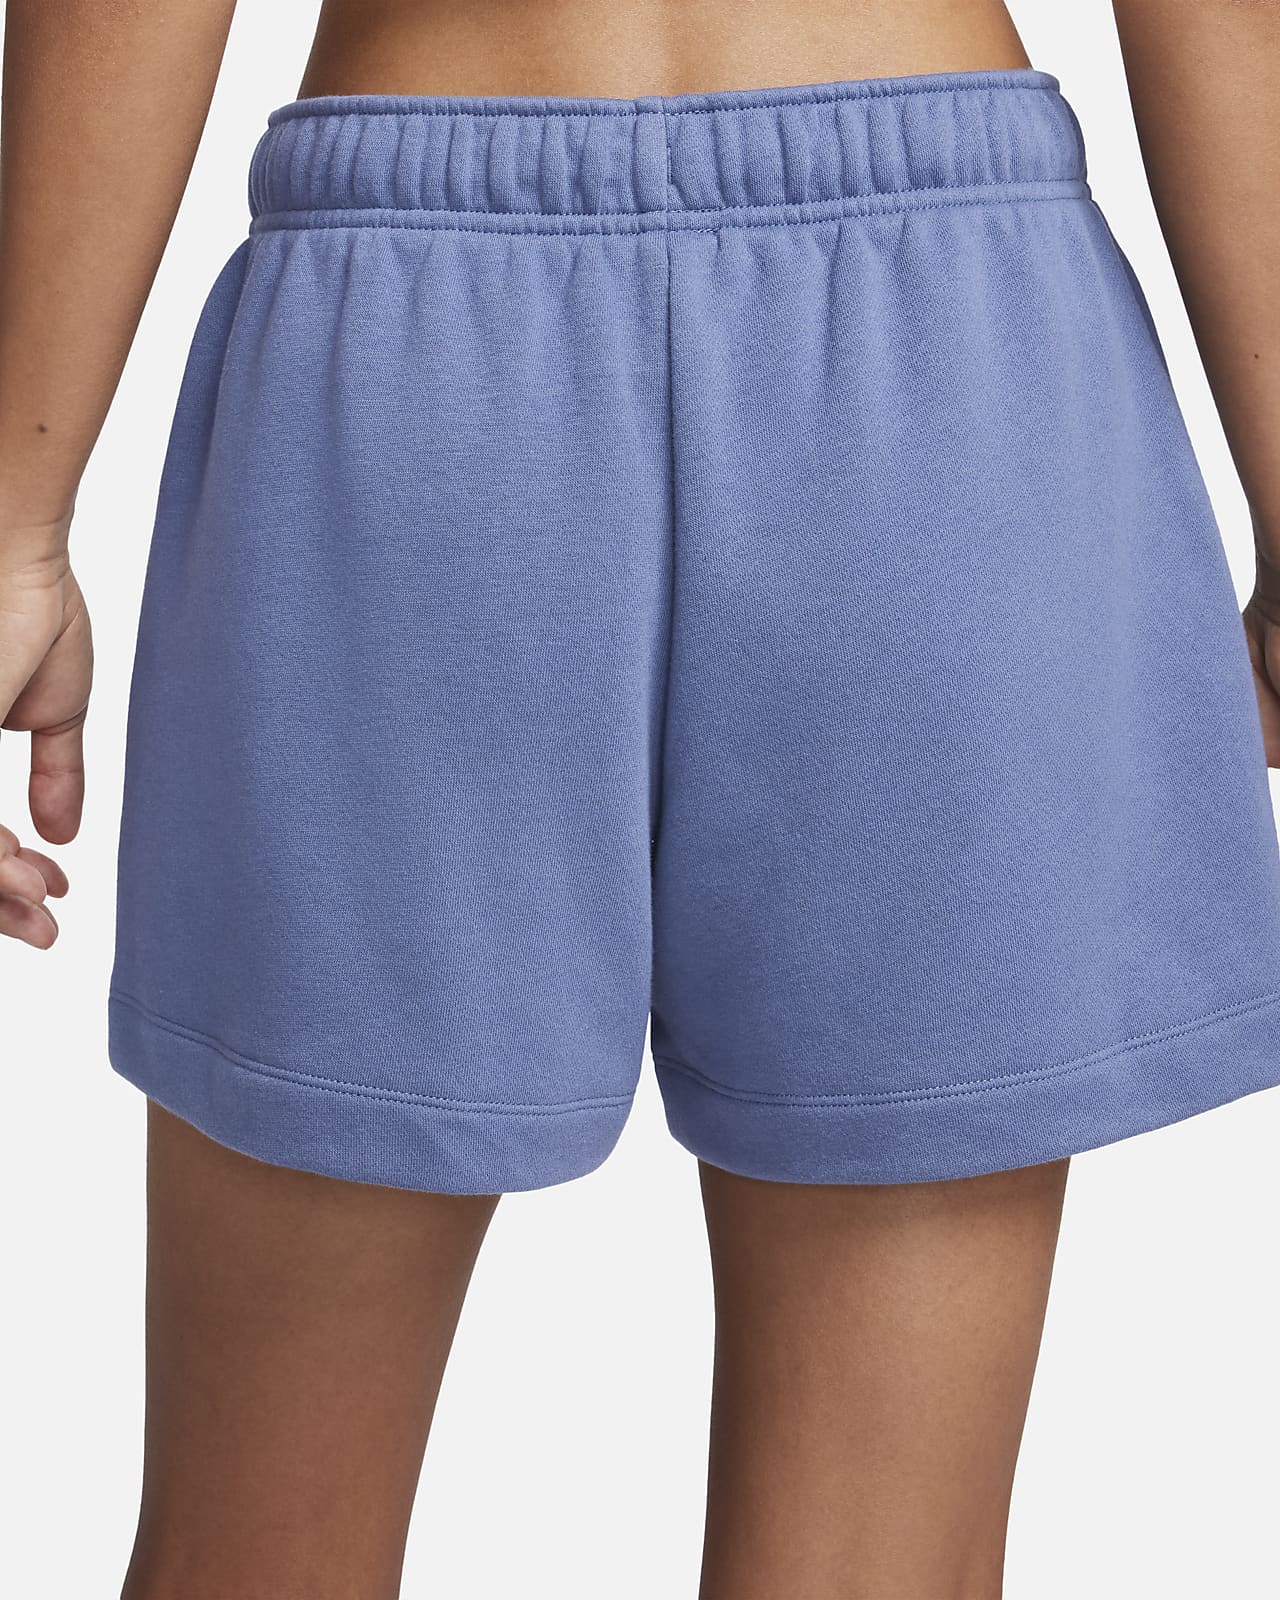 light blue nike shorts women's